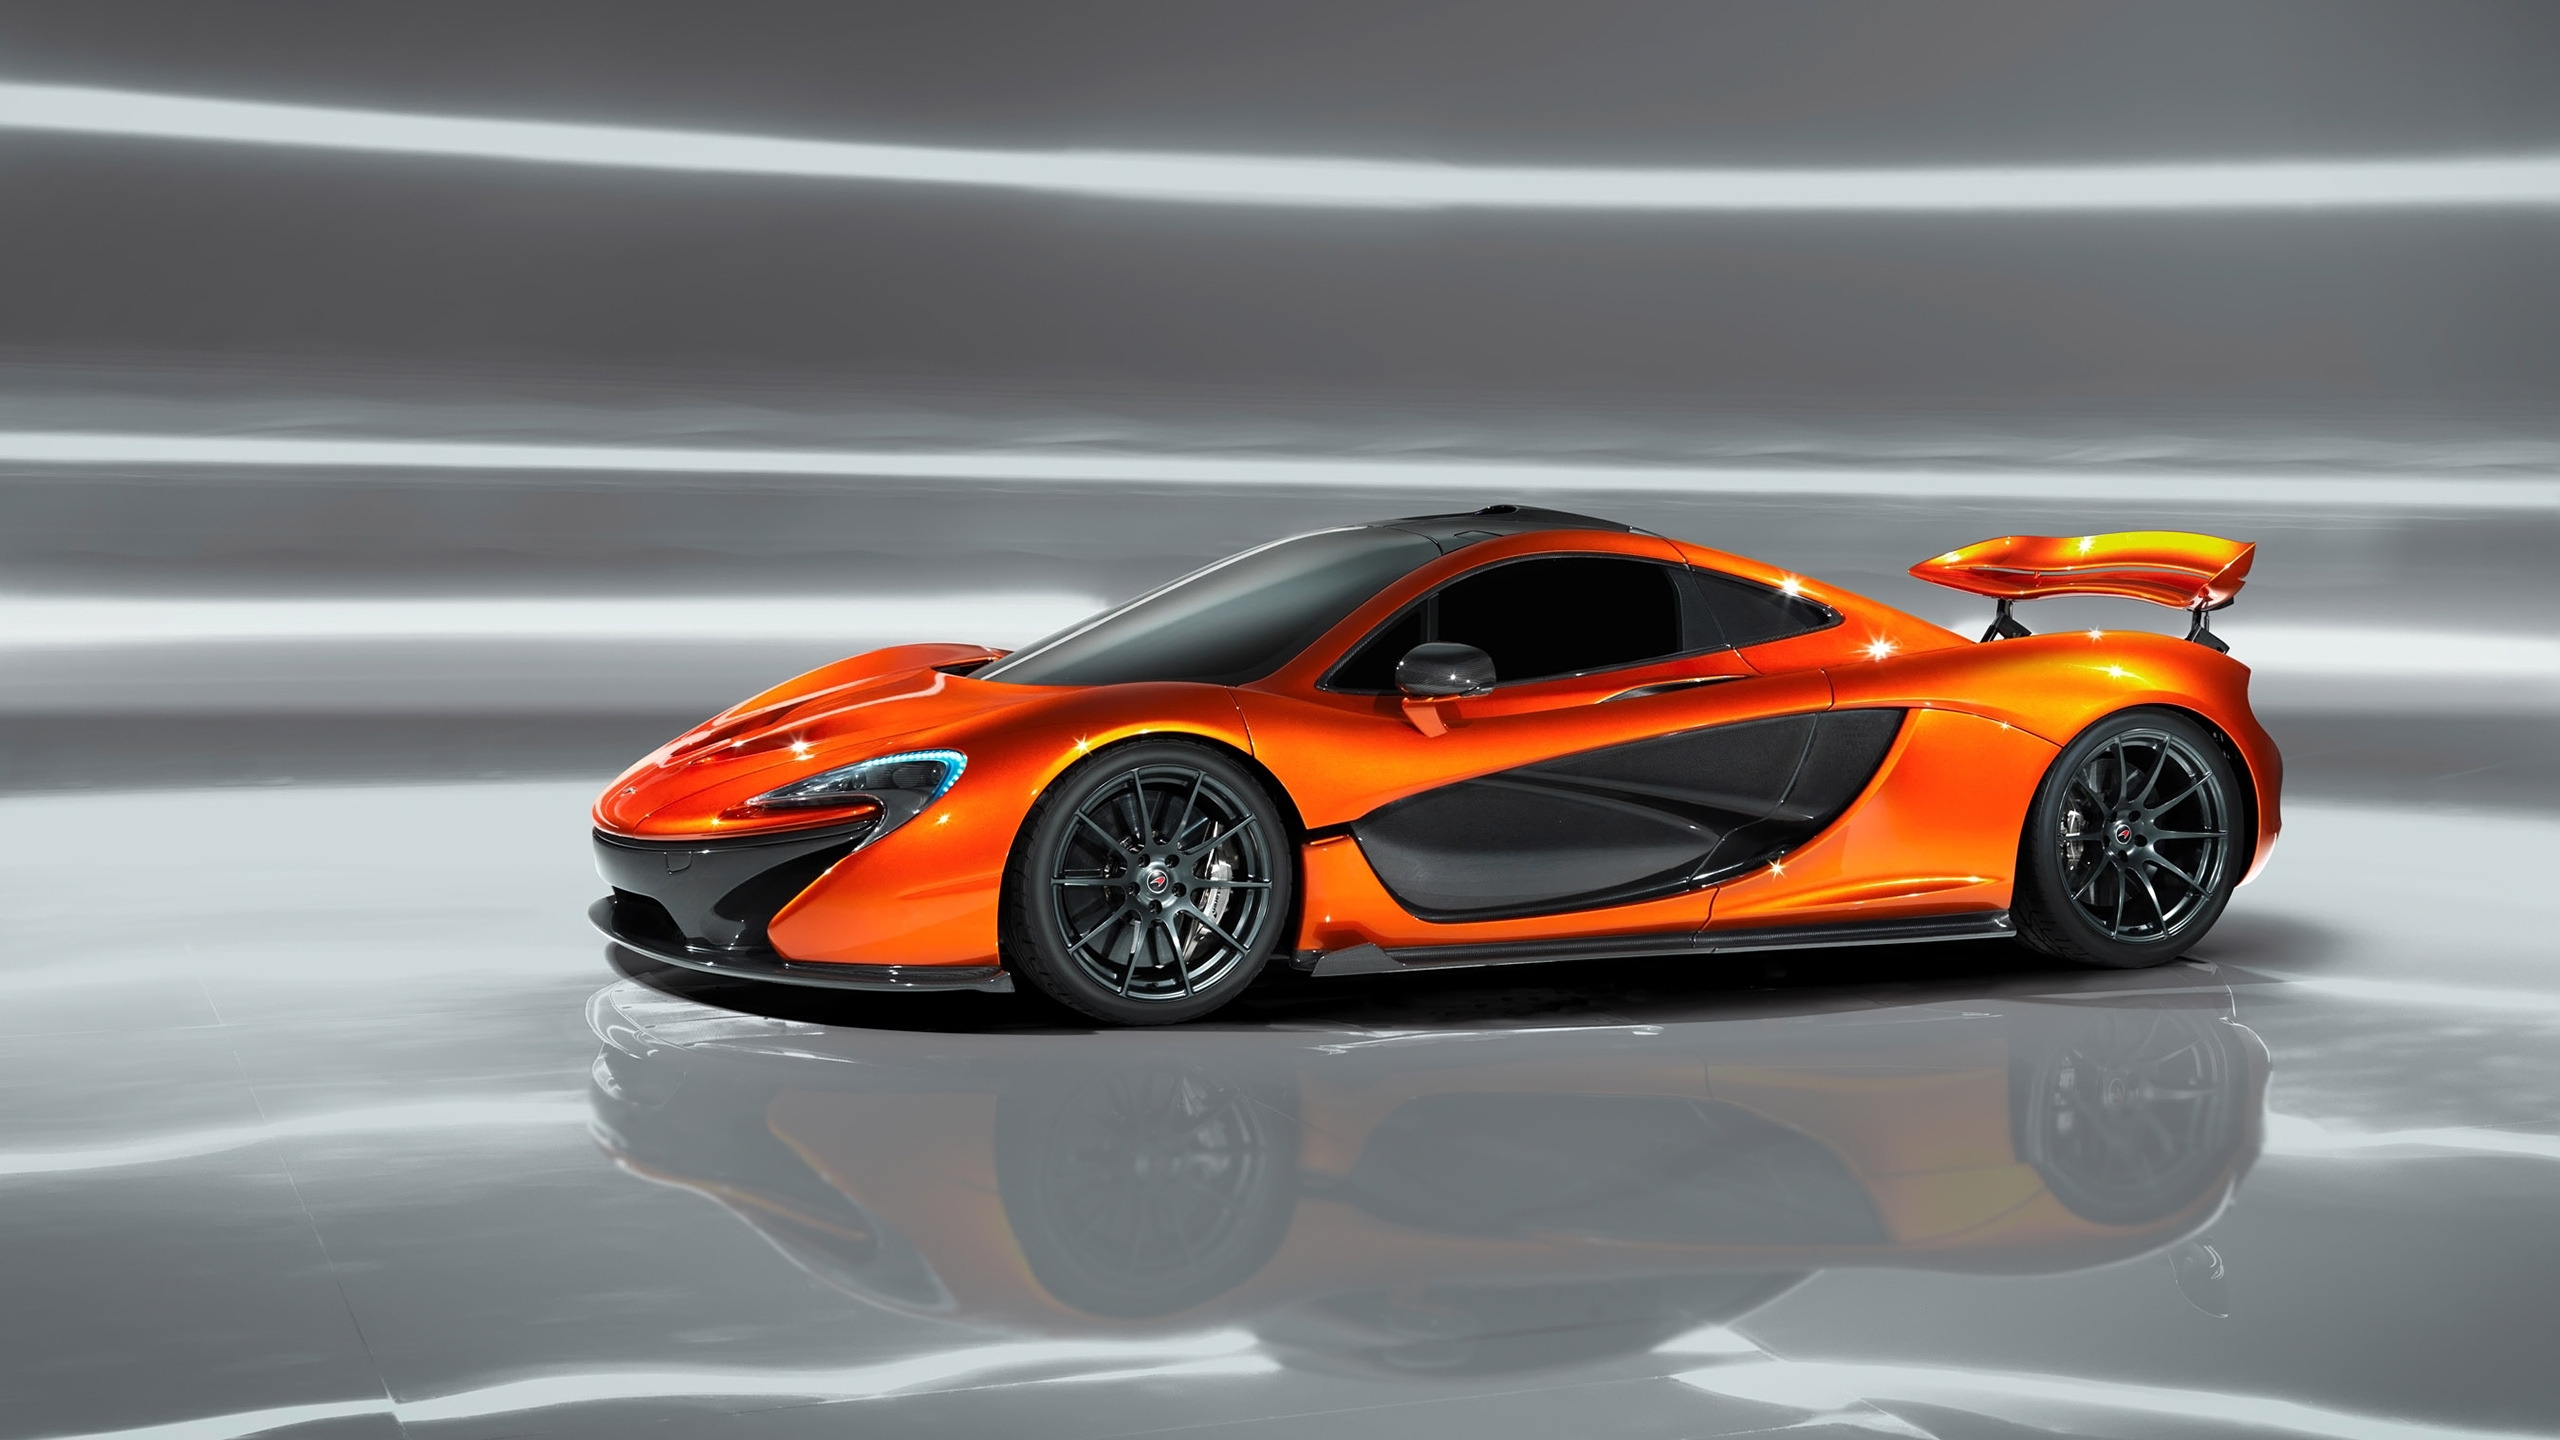 Orange McLaren P1 Concept for 2560x1440 HDTV resolution